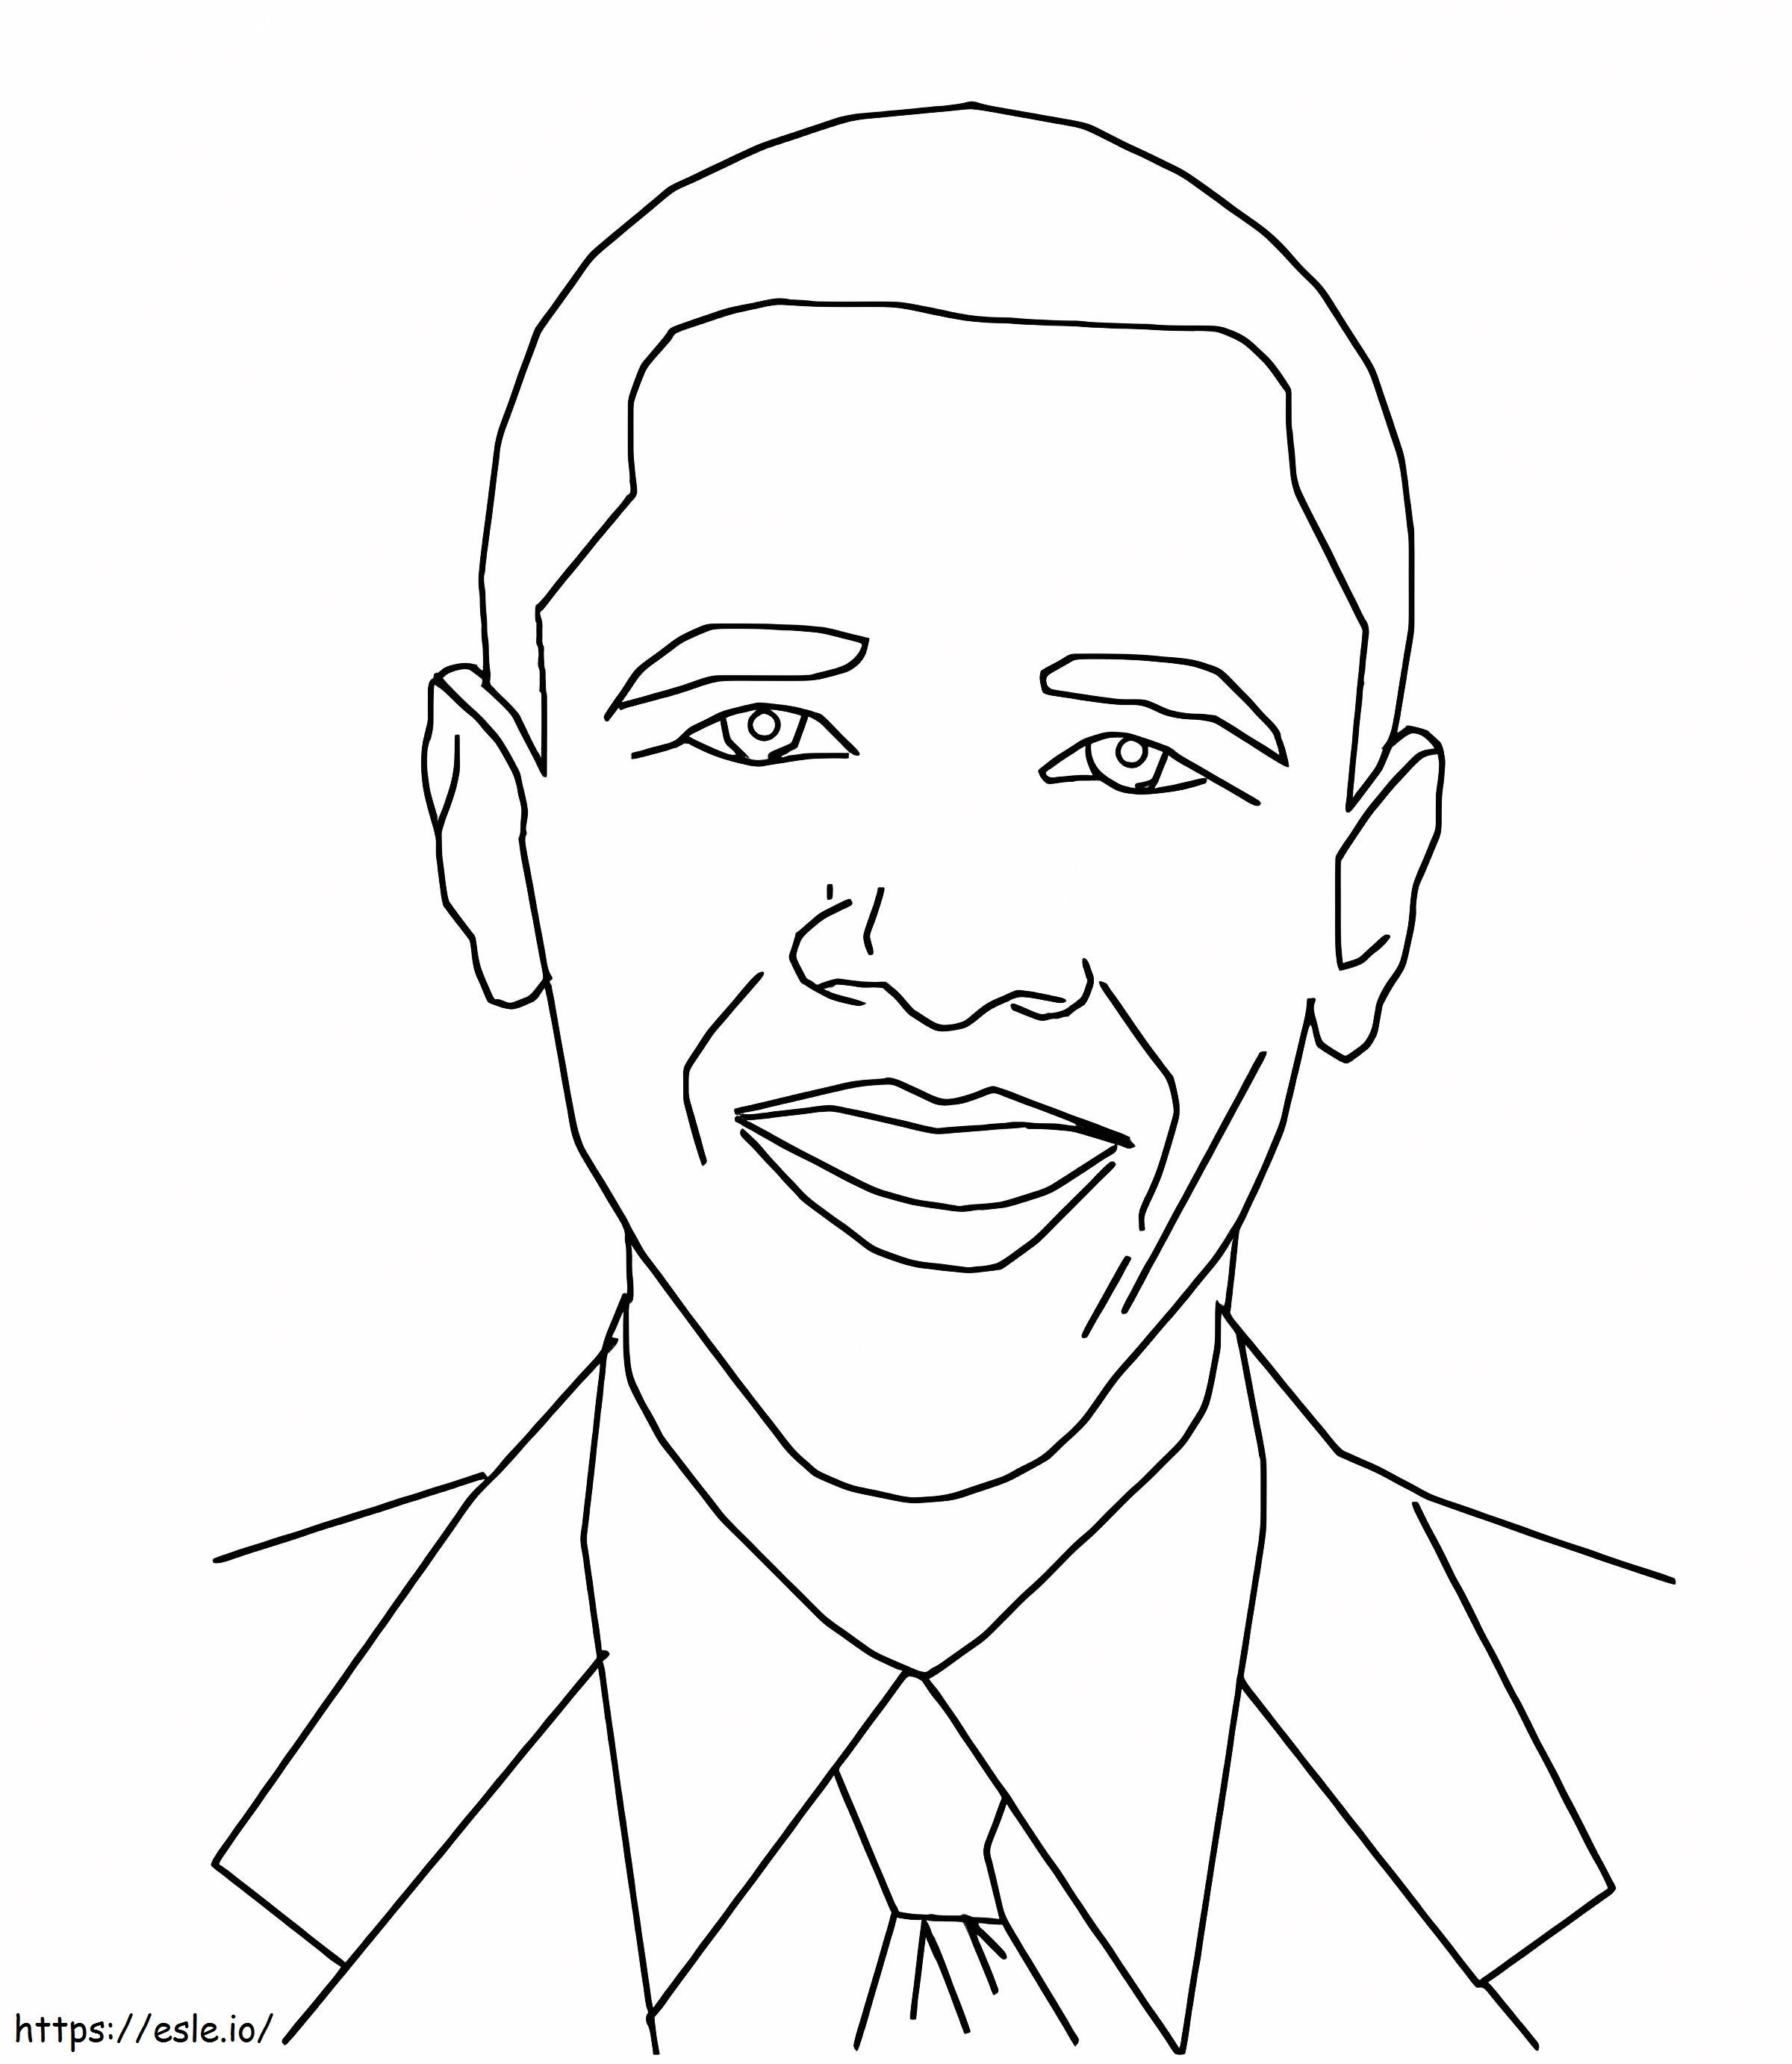 Coloriage Obama simple à imprimer dessin